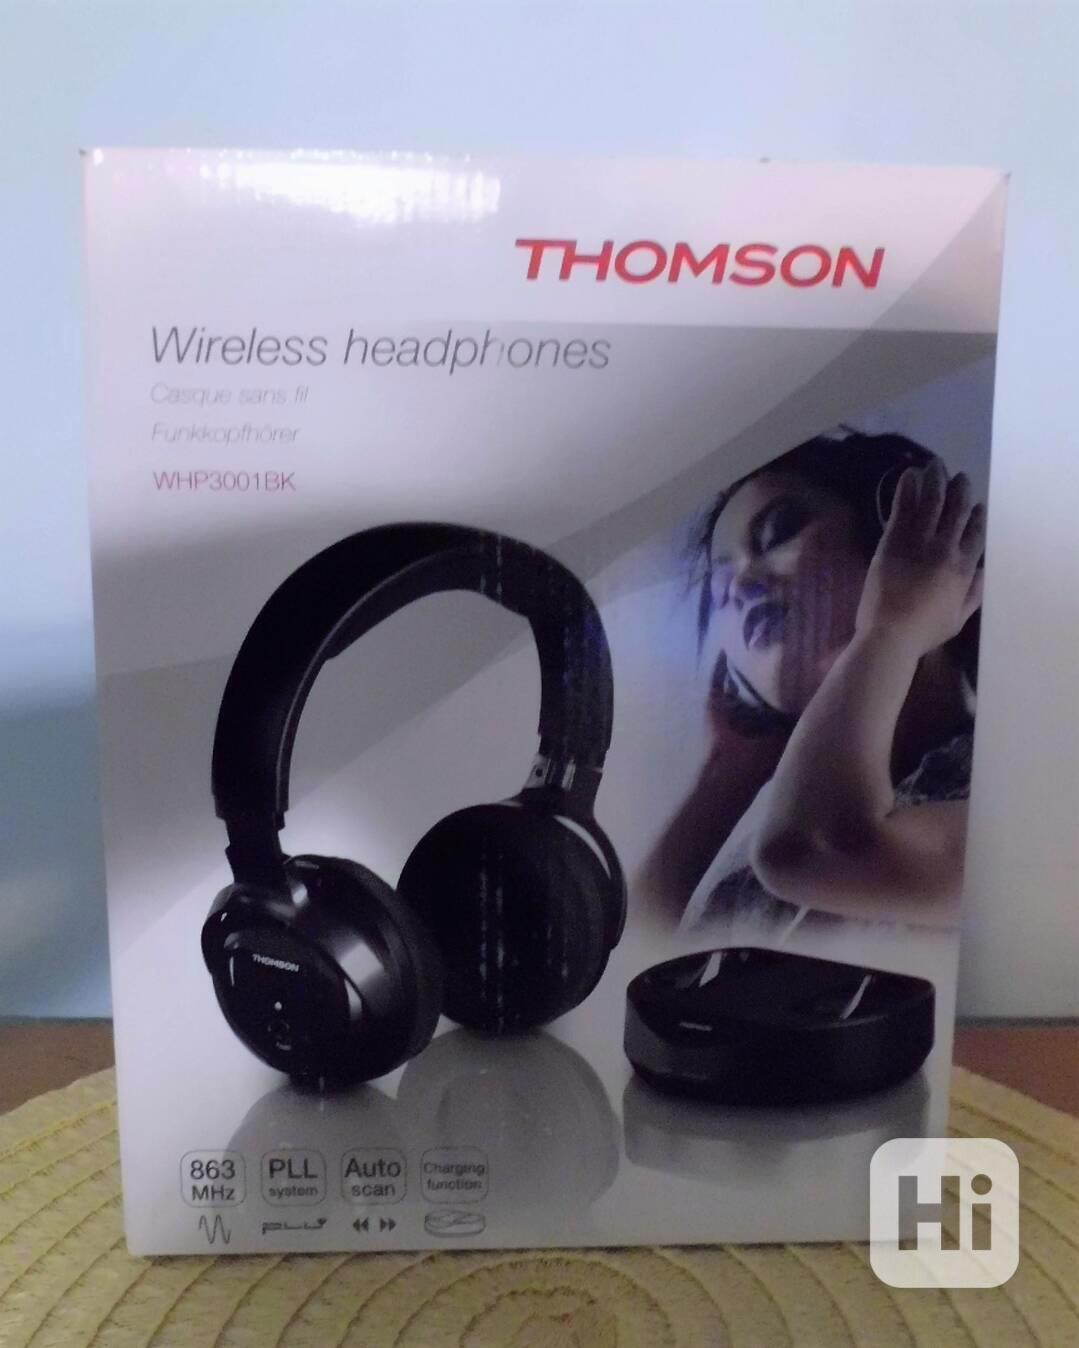 Bezdrátová sluchátka Thomson P3001 - foto 1